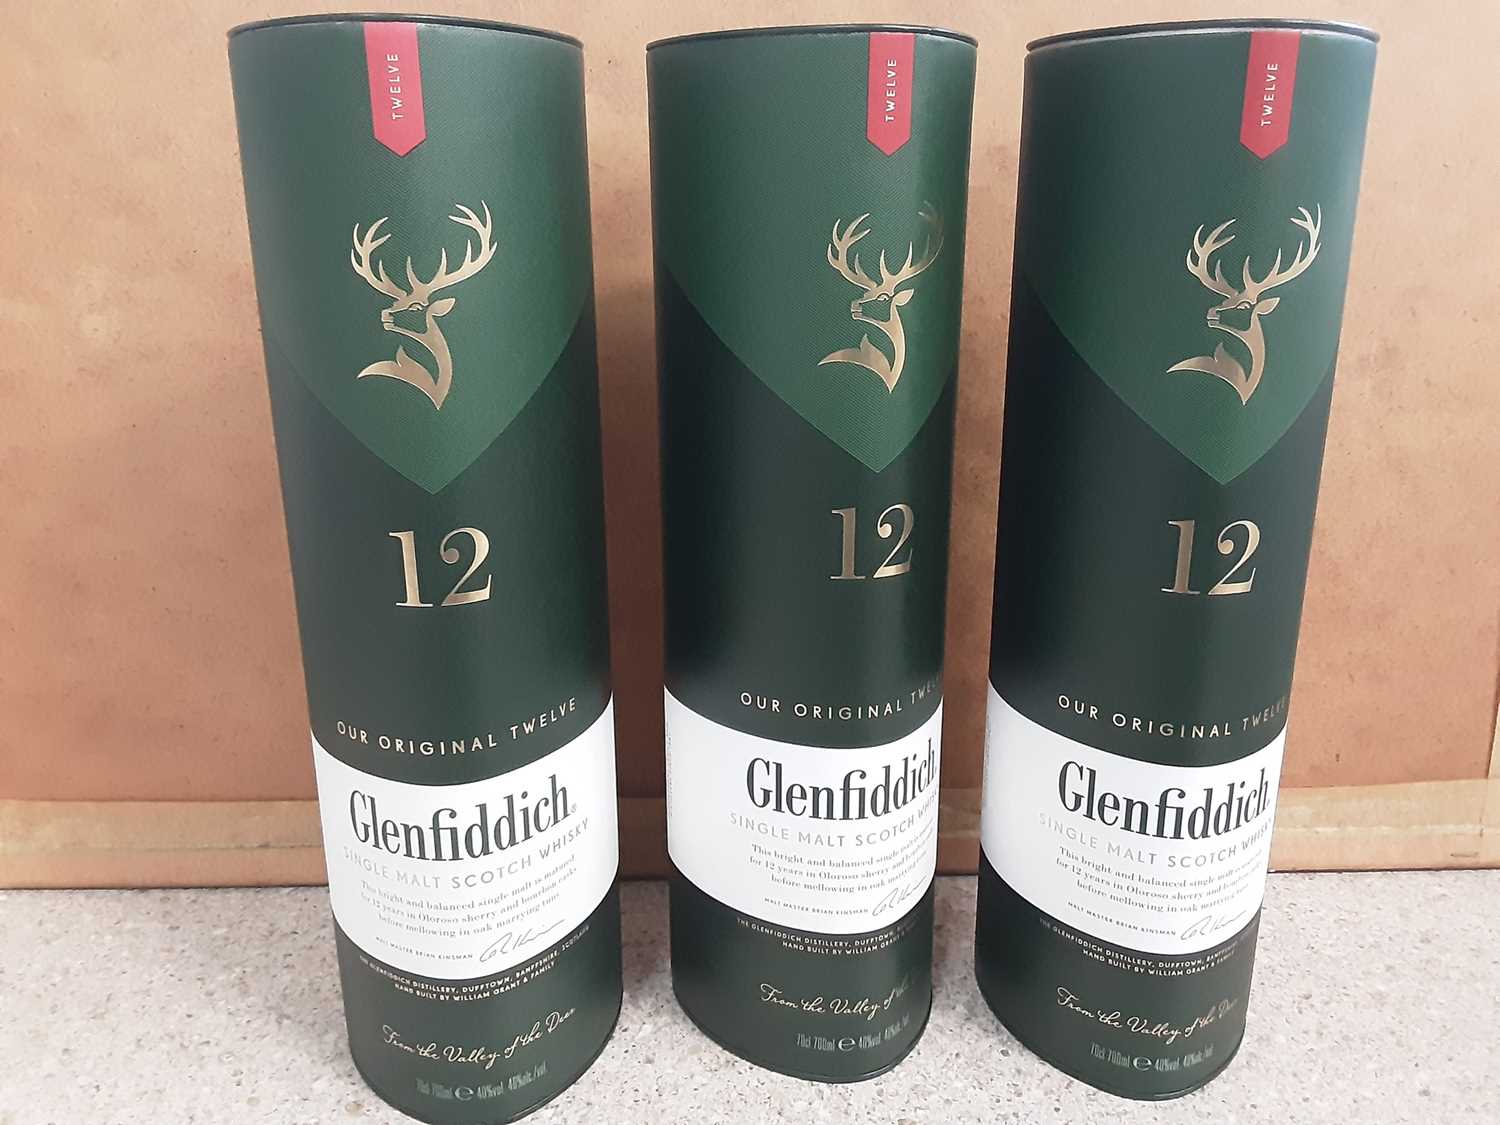 Three bottles of Glenfiddich The Original Twelve 75cl single malt scotch whisky, in original boxes